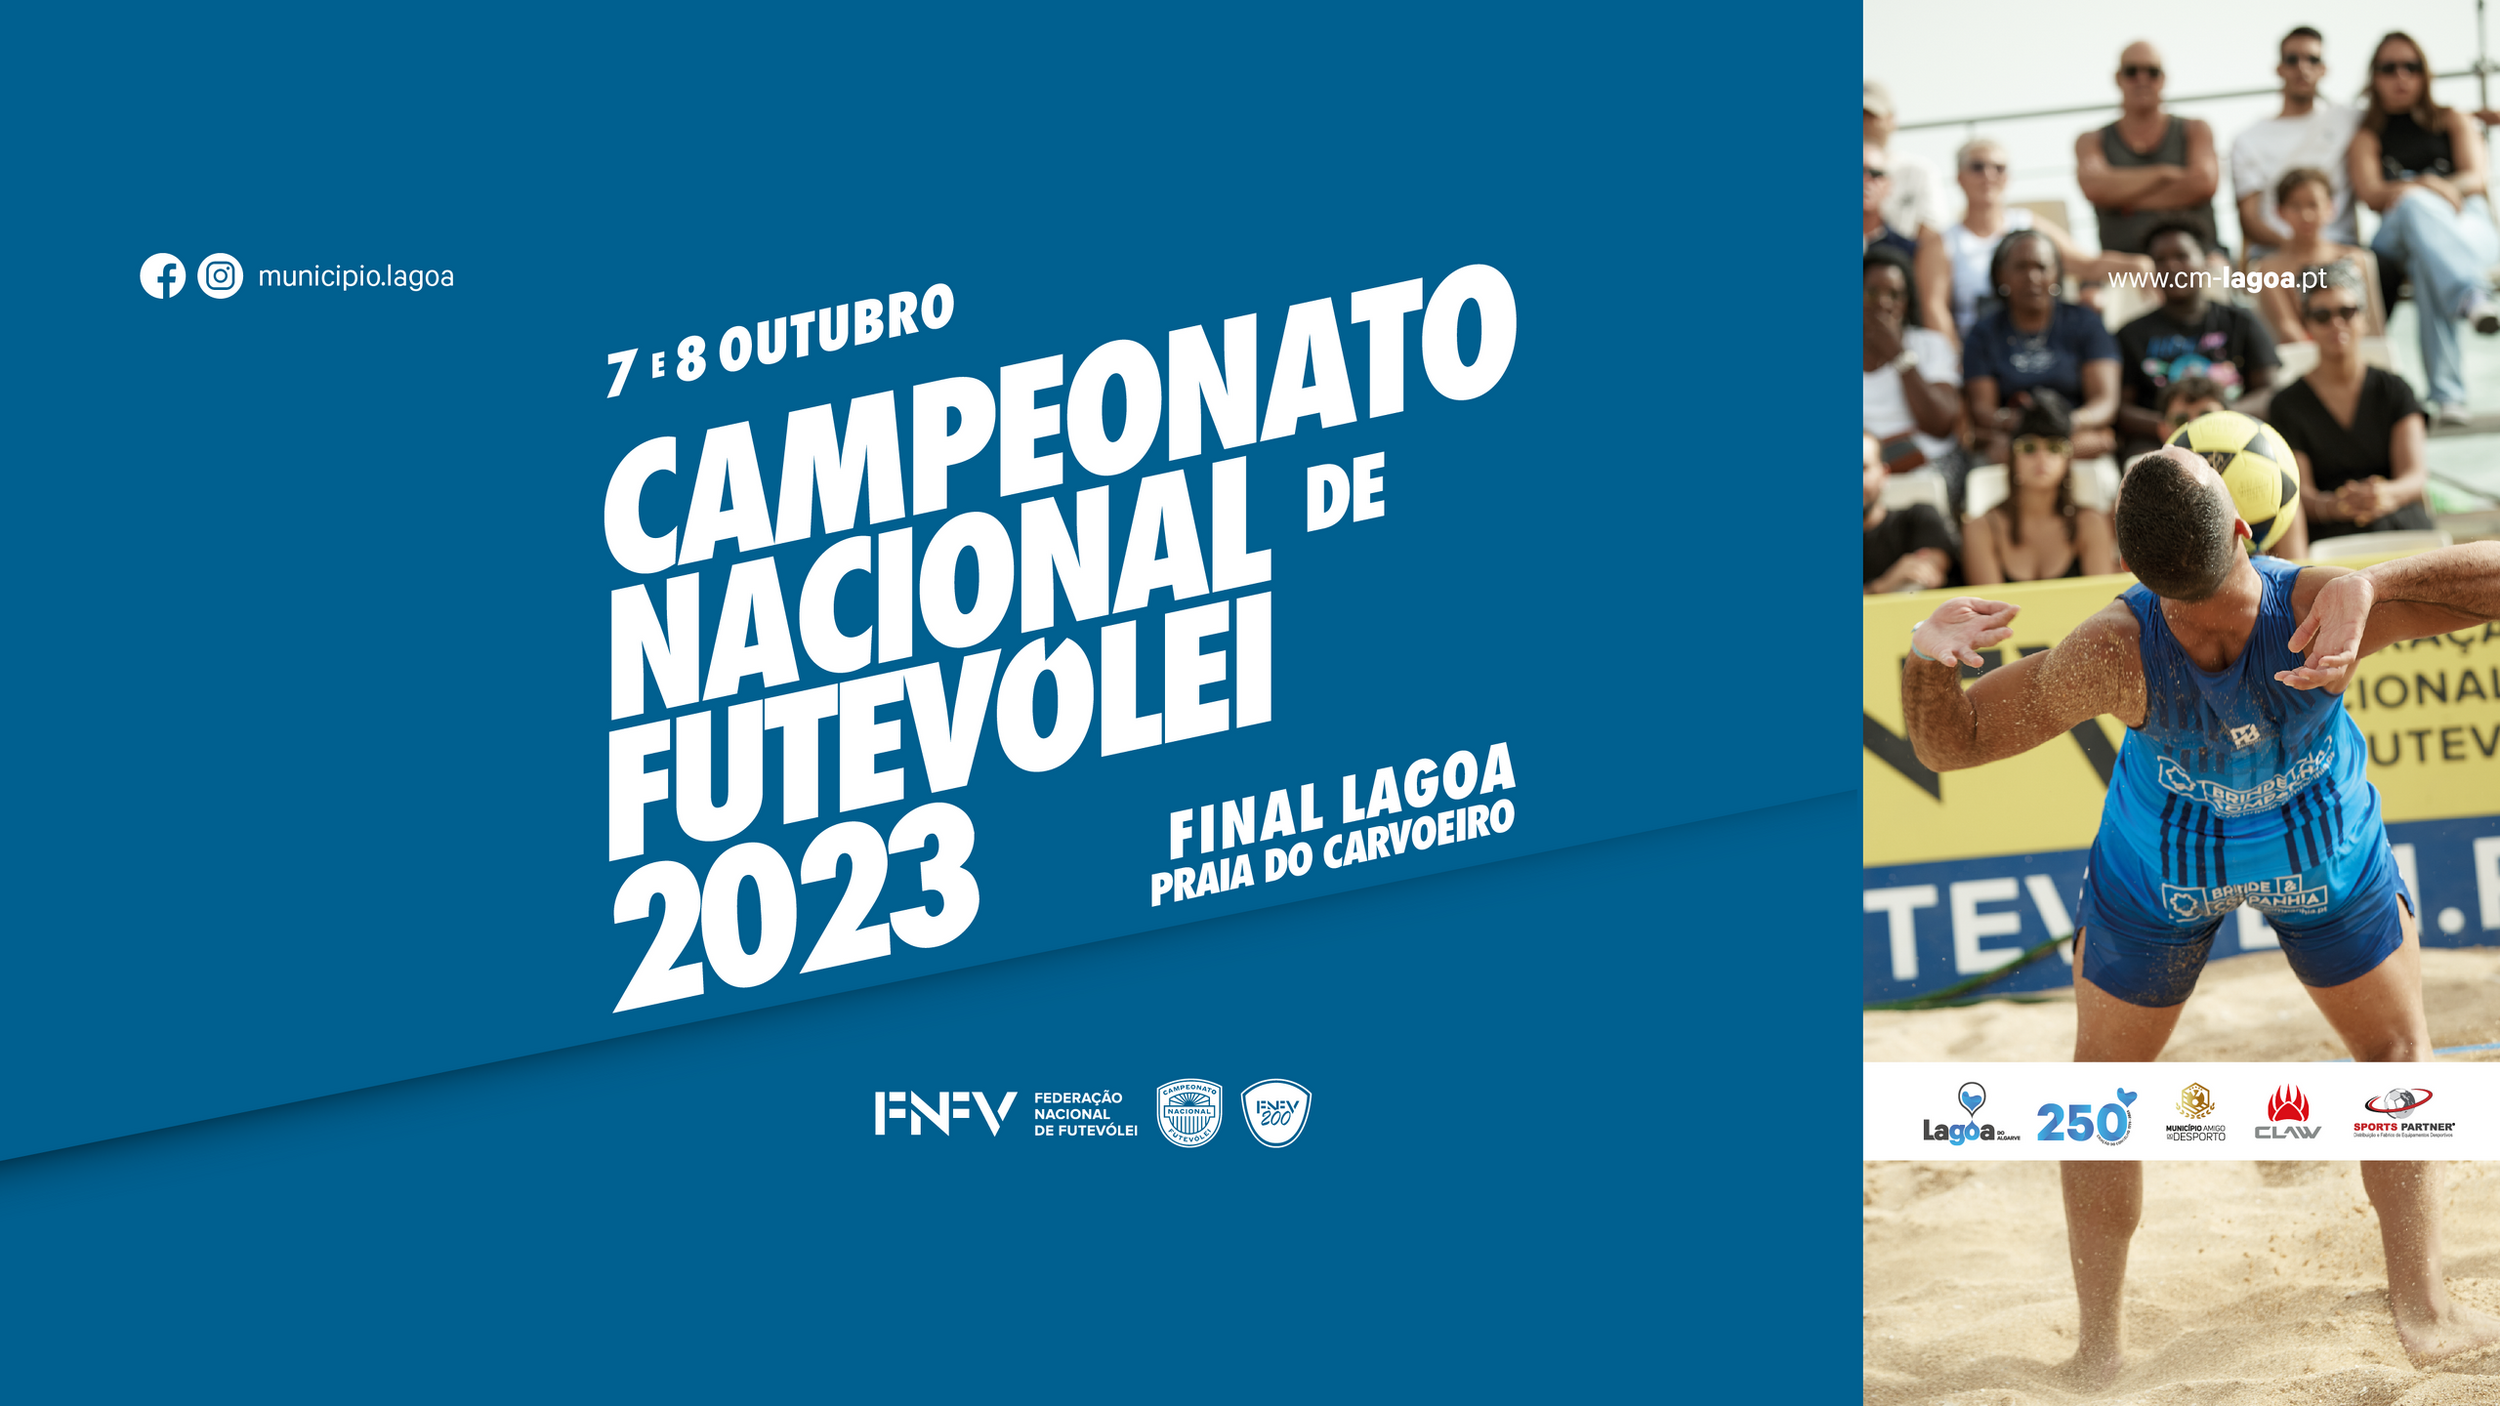 Campeonato Nacional de Futevólei 2023 - Final